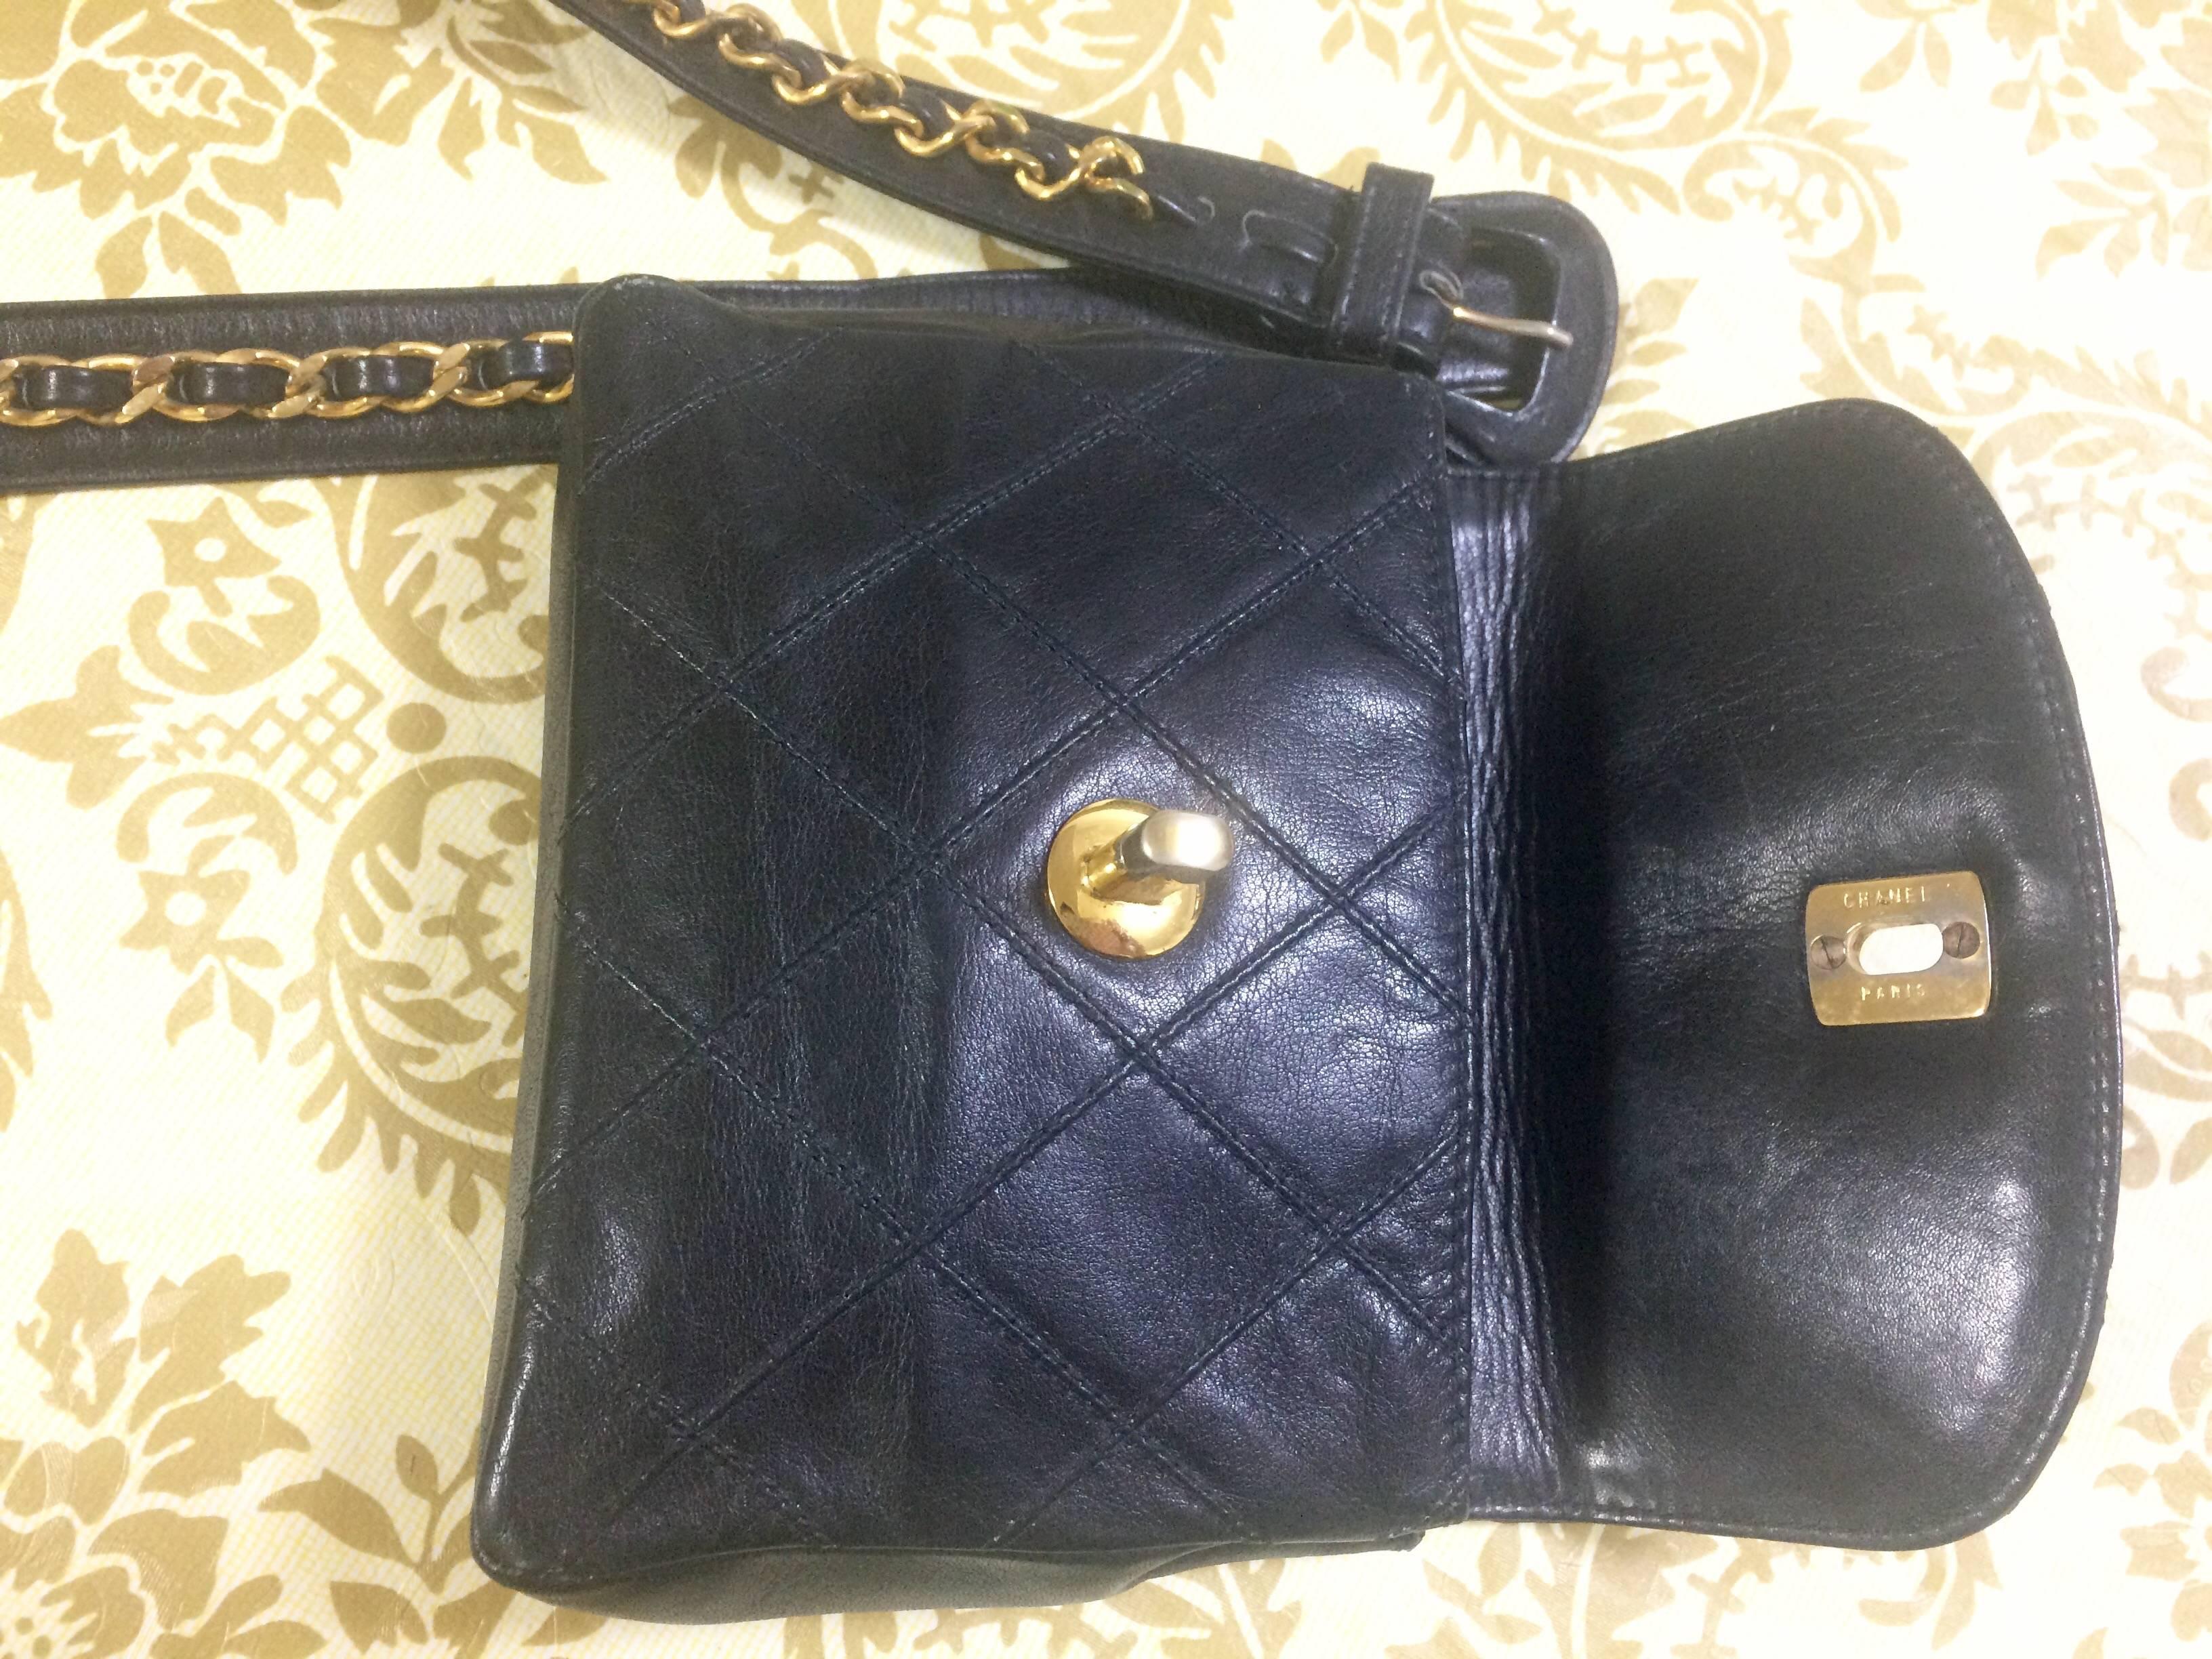 Vintage CHANEL black leather 2.55 waist purse, fanny bag with golden chain belt. 1